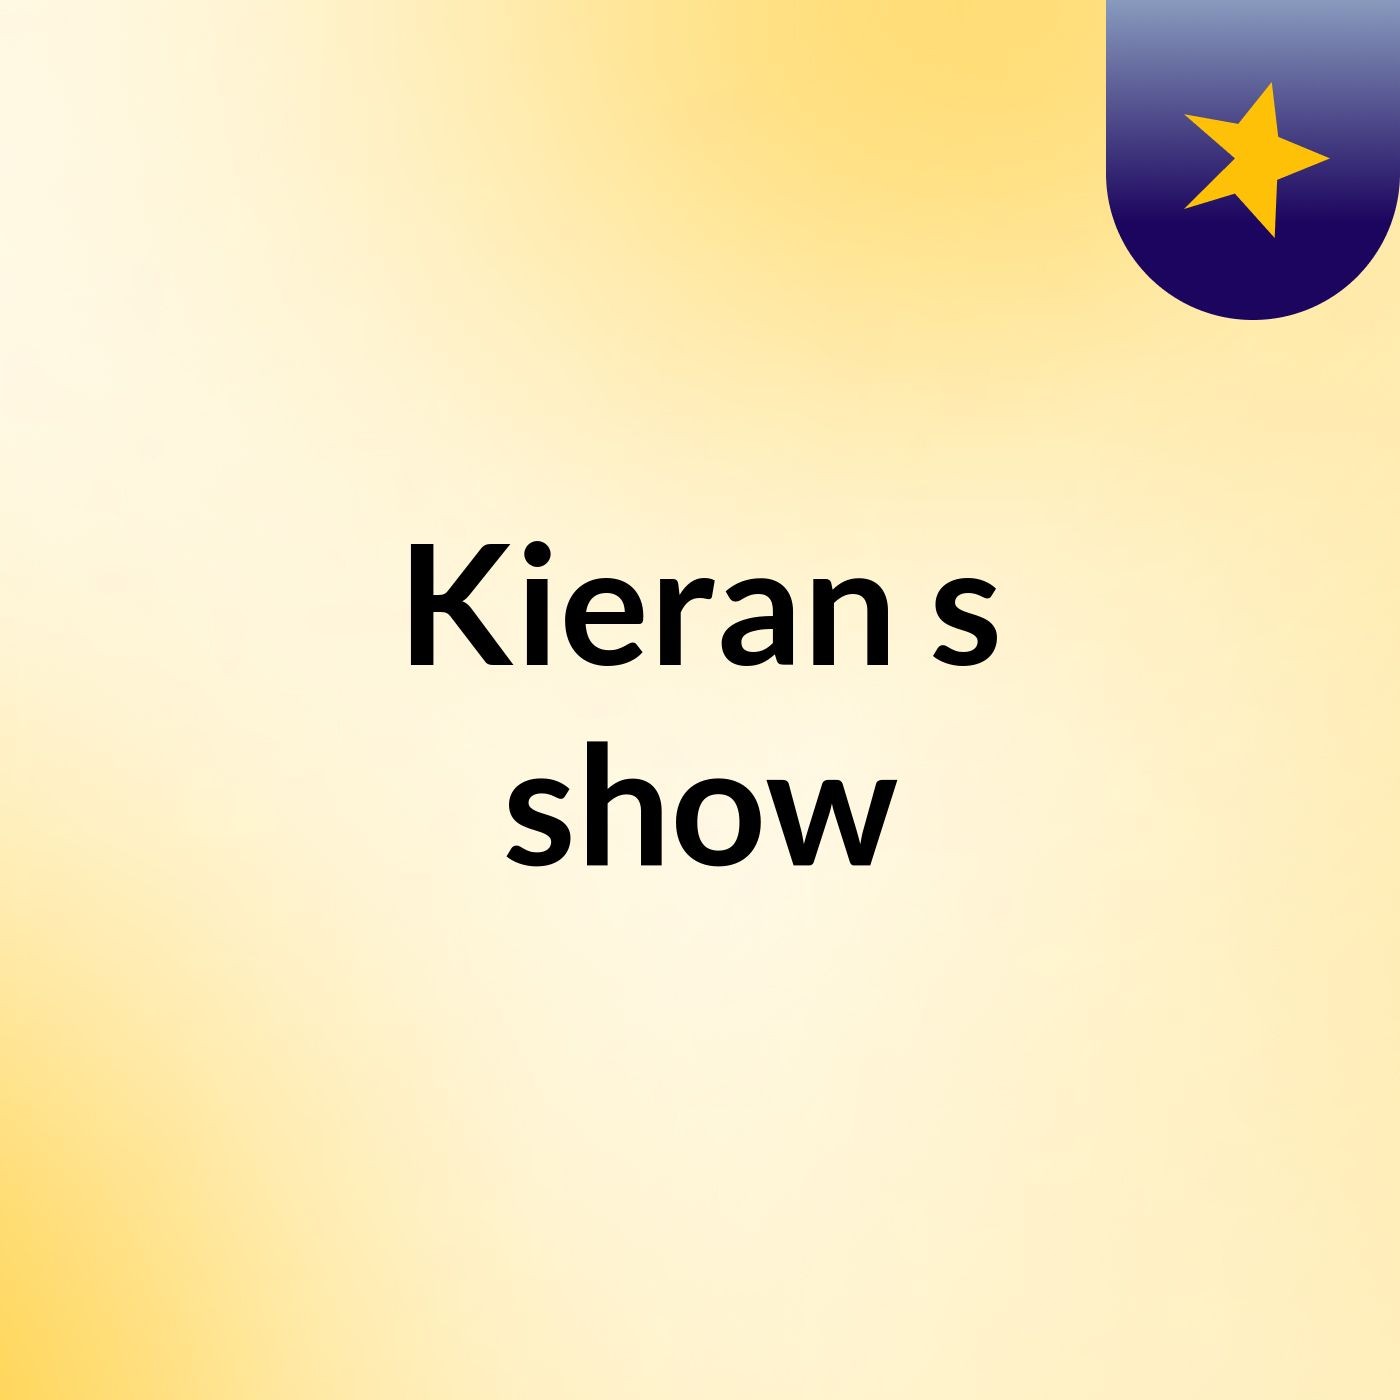 Kieran's show